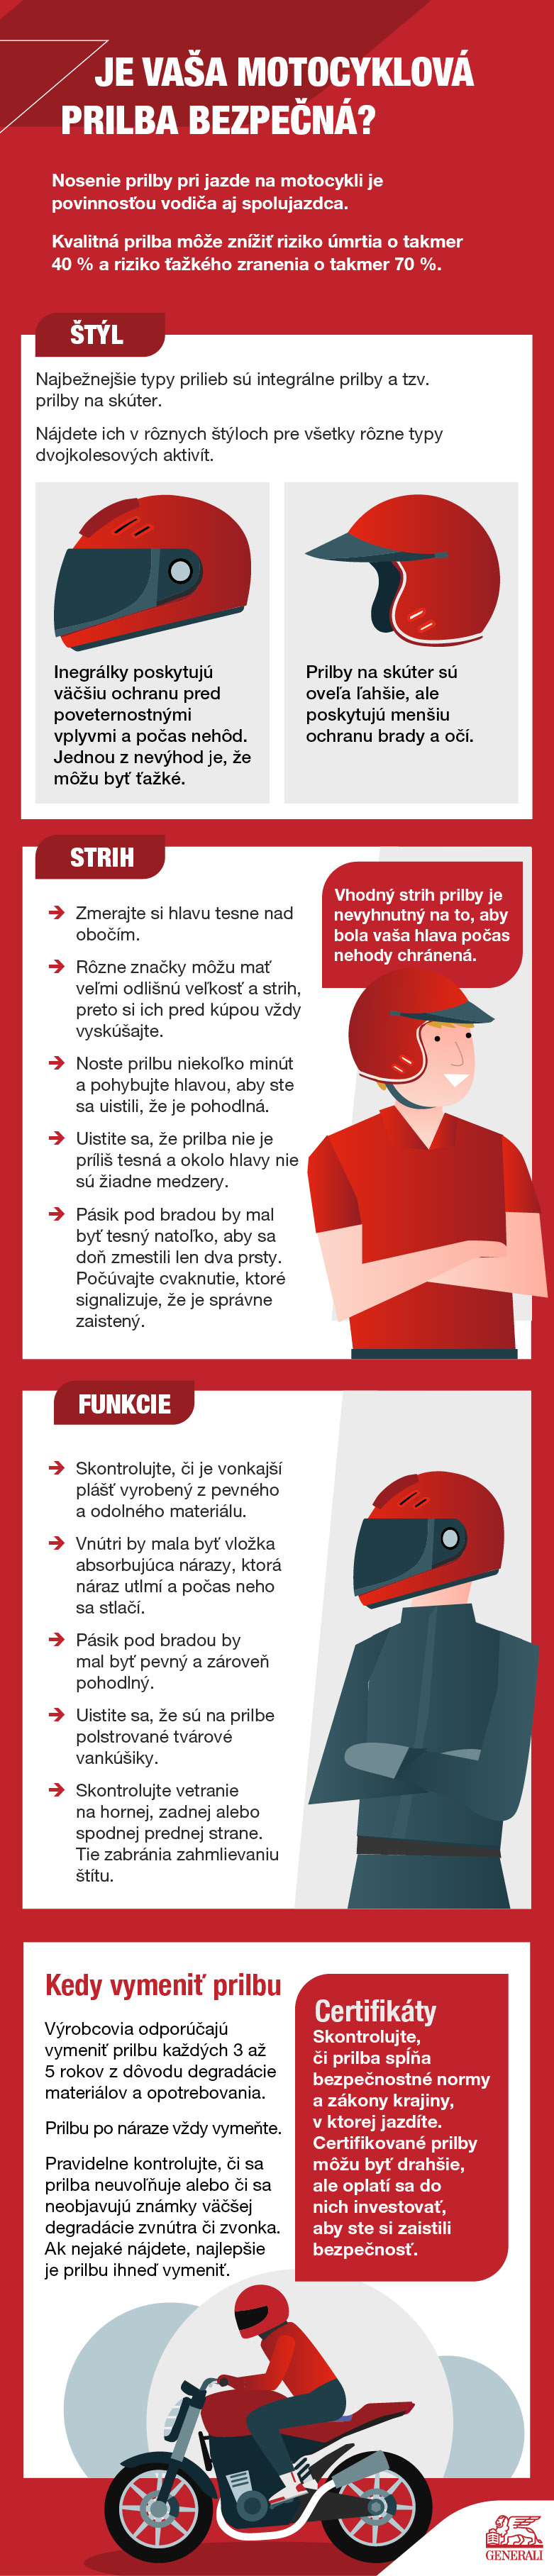 Generali_How safe is your Motorbike Helmet_Infographic_SLOVAKIA_220822.png